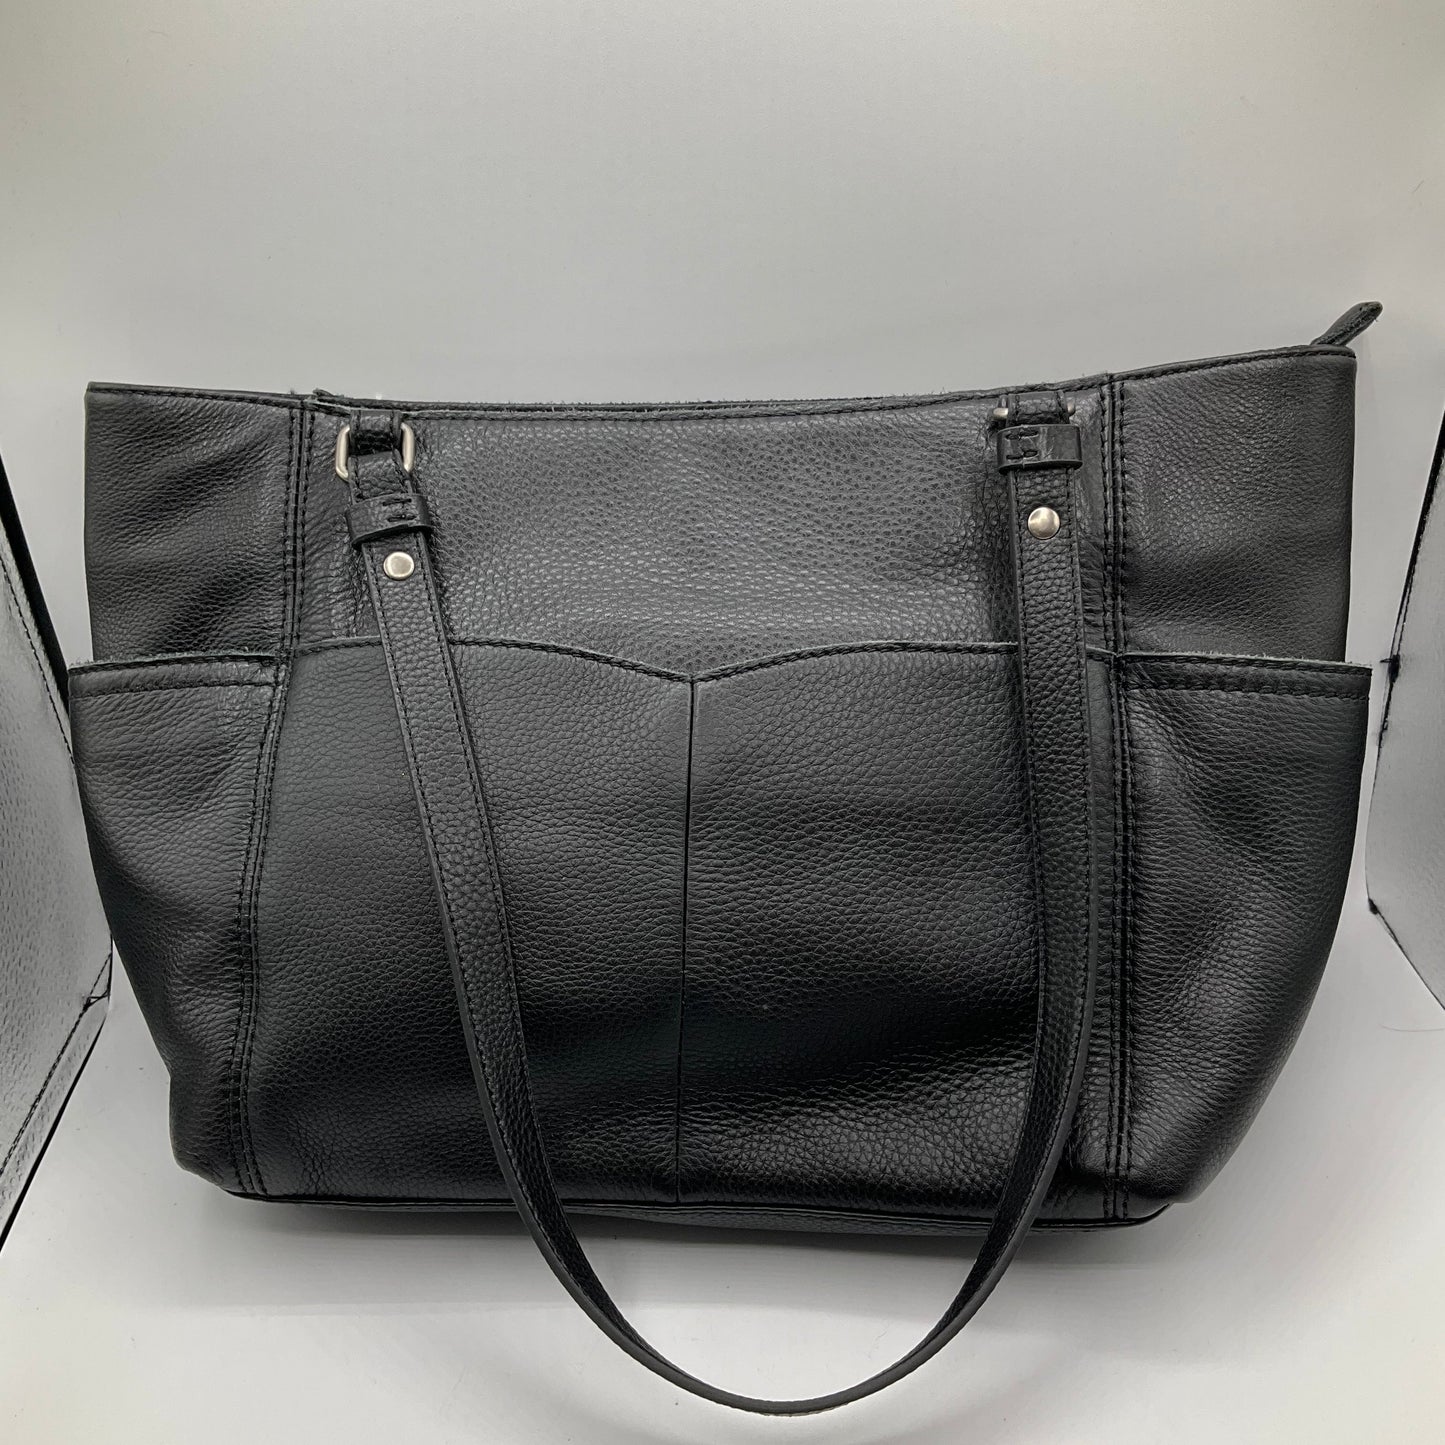 Handbag The Sak, Size Medium